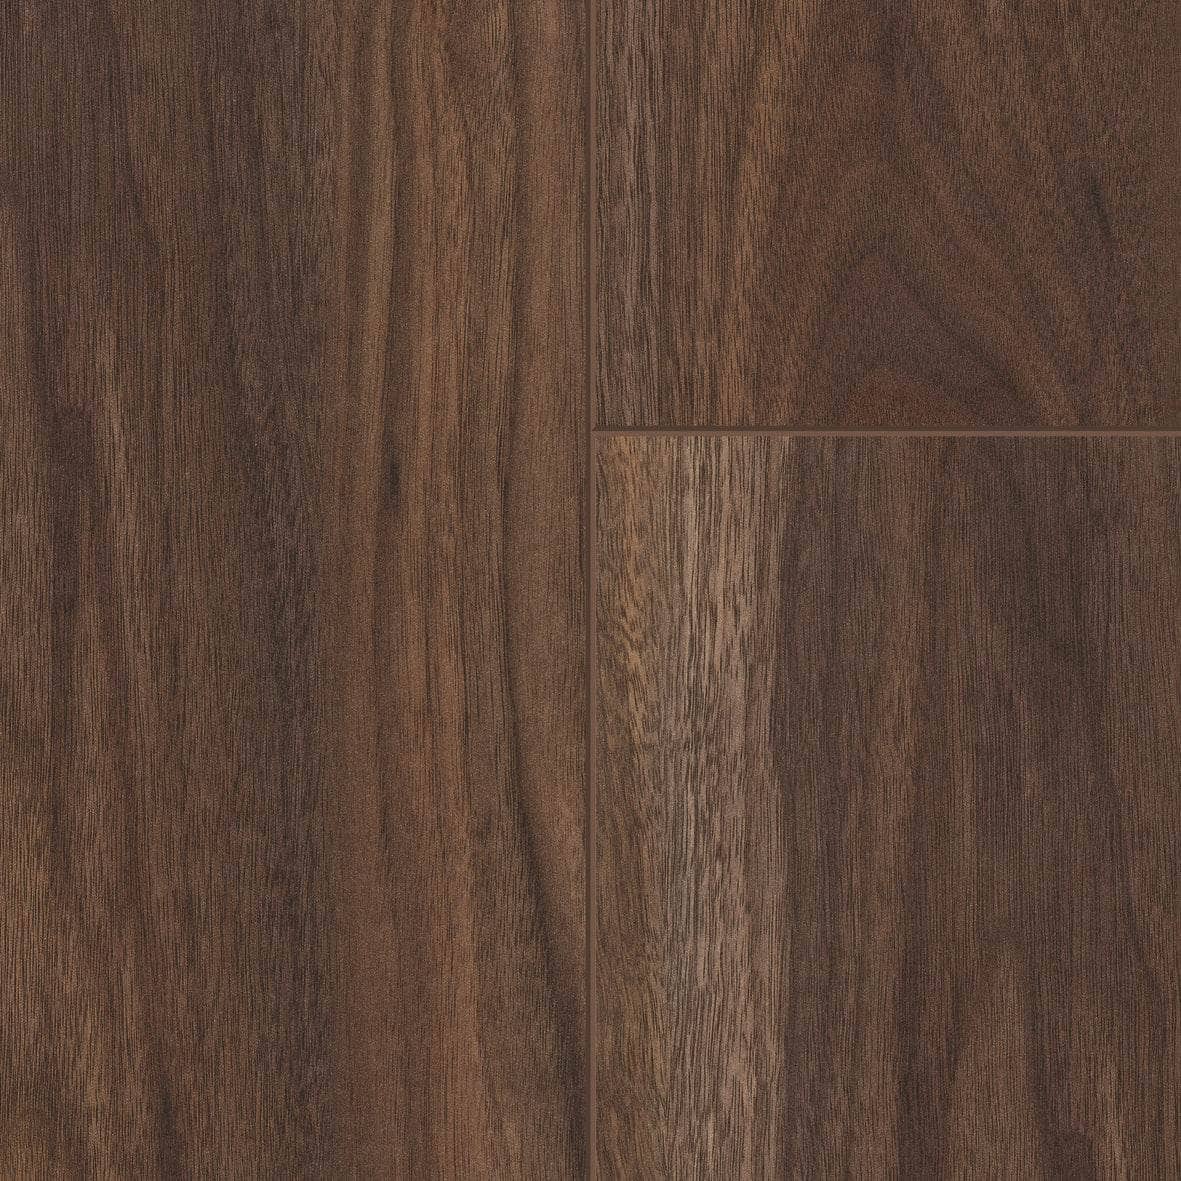 Flooring & Carpet  -  Krono Vario Plus Dark Walnut 12mm Laminate Flooring (1.48m² Pack)  -  60003742